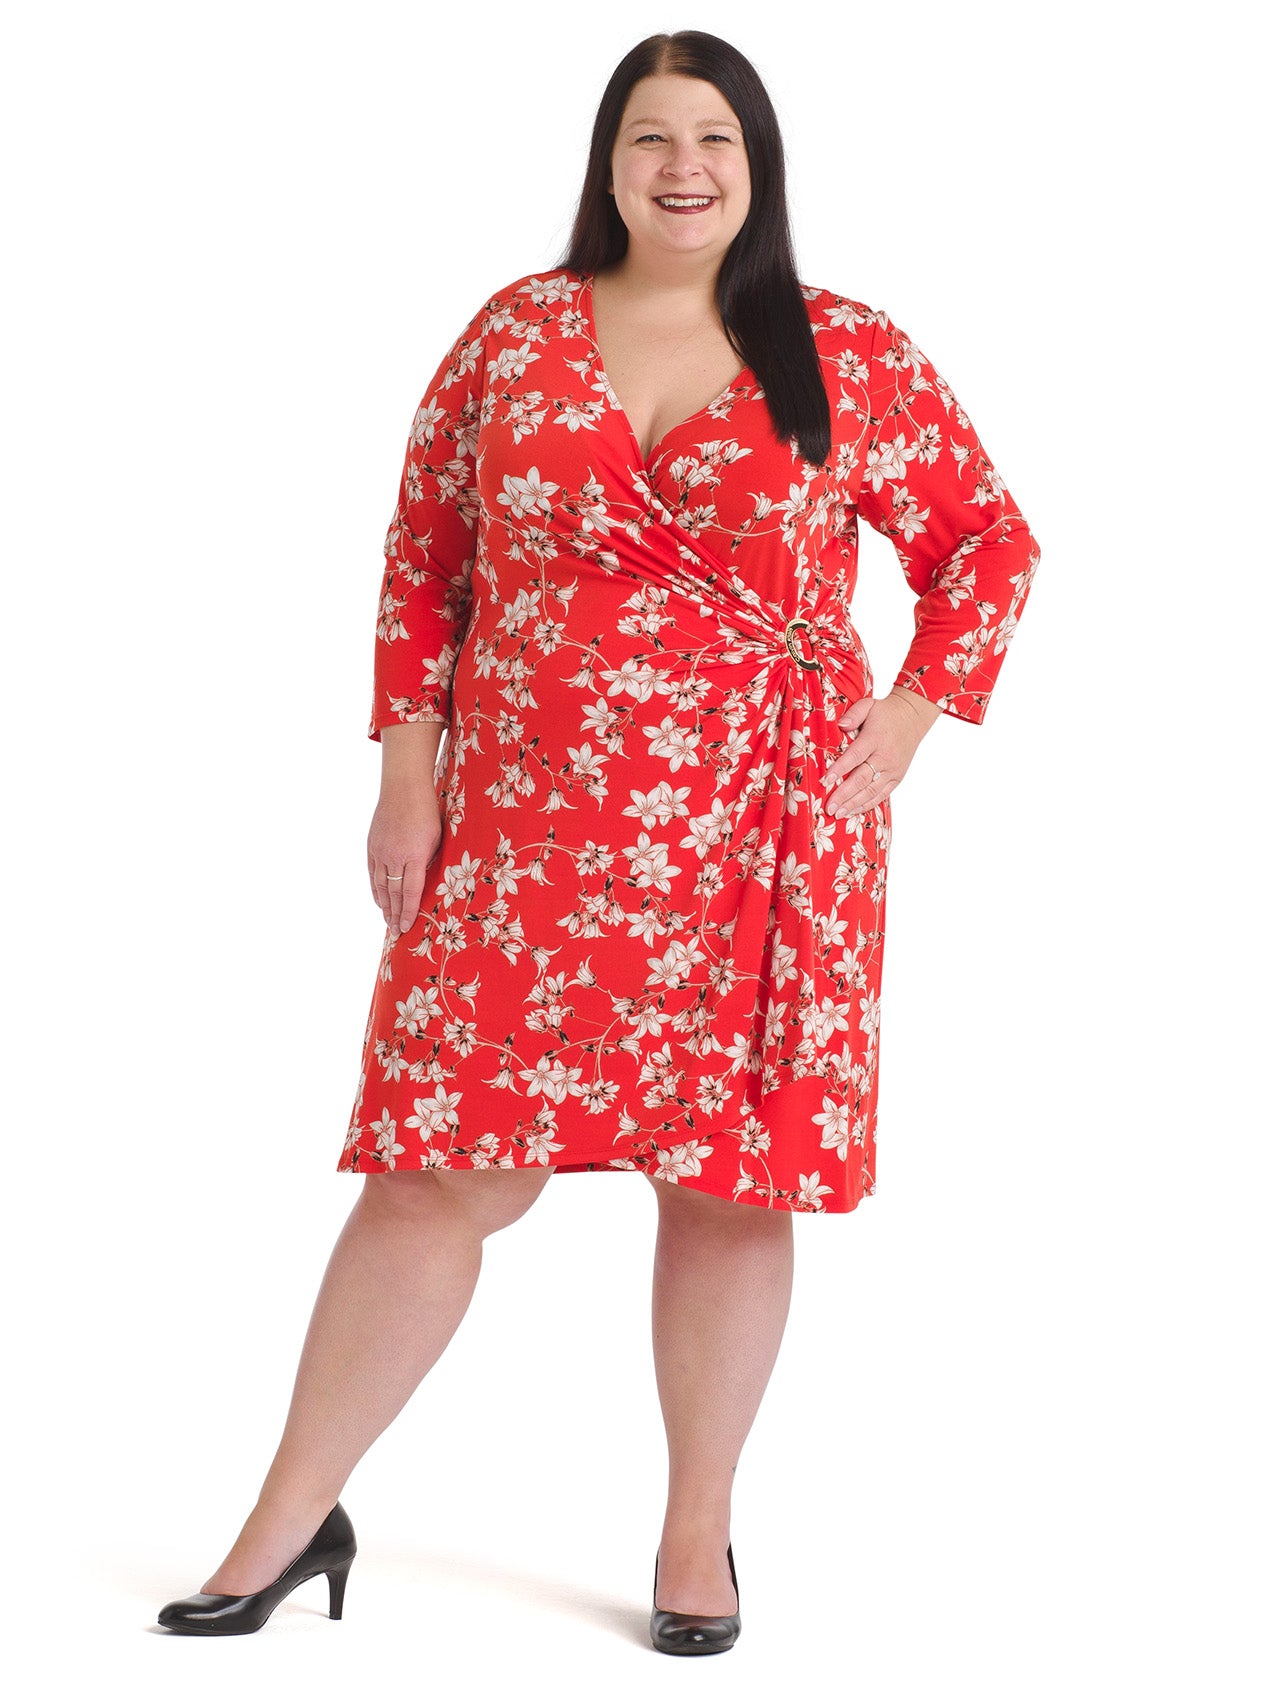 Knit Red Floral Faux Wrap Dress | Calvin Klein | Gwynnie Bee Rental  Subscription